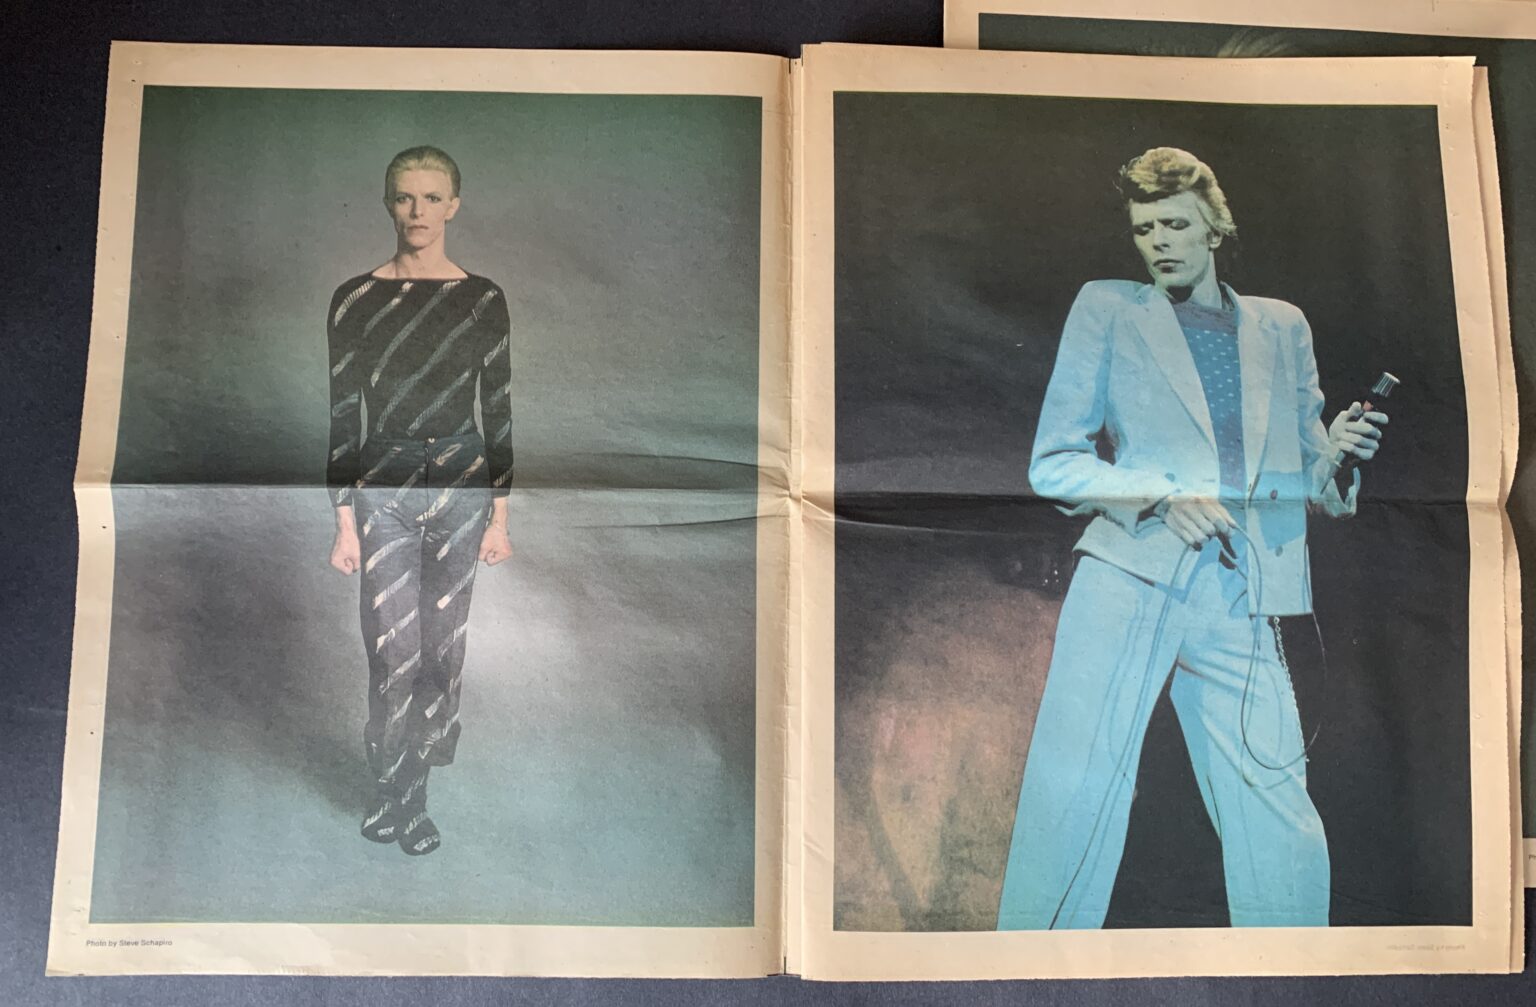 David Bowie Isolar I 1976 US tour programmes : Pleasures of Past Times